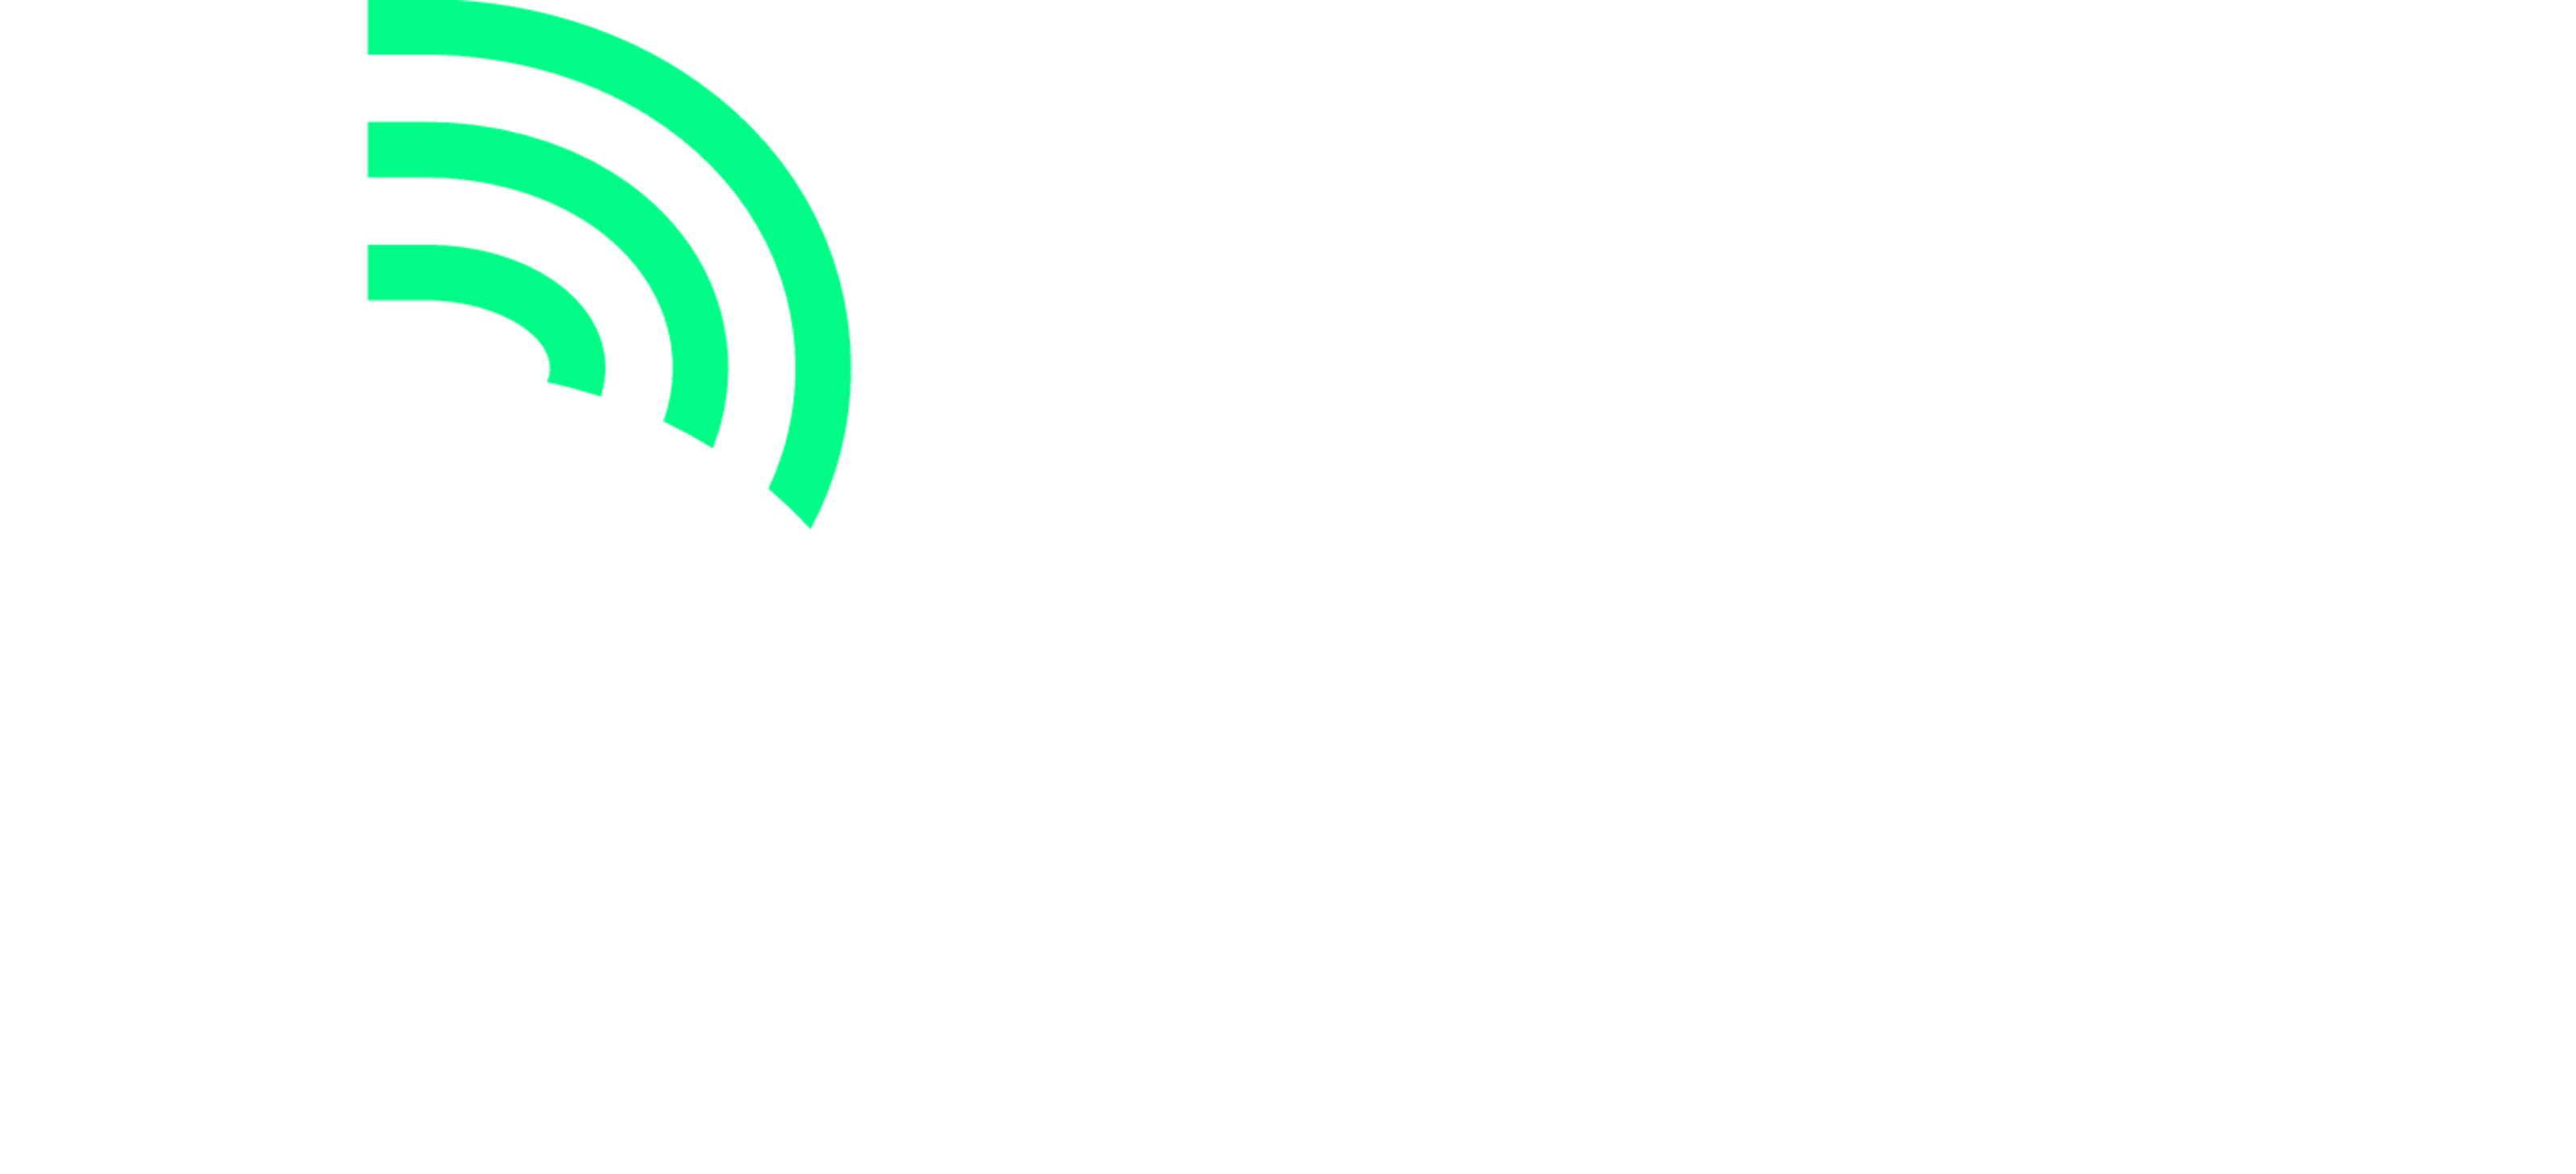 Big Brothers Big Sisters of Southwestern Indiana